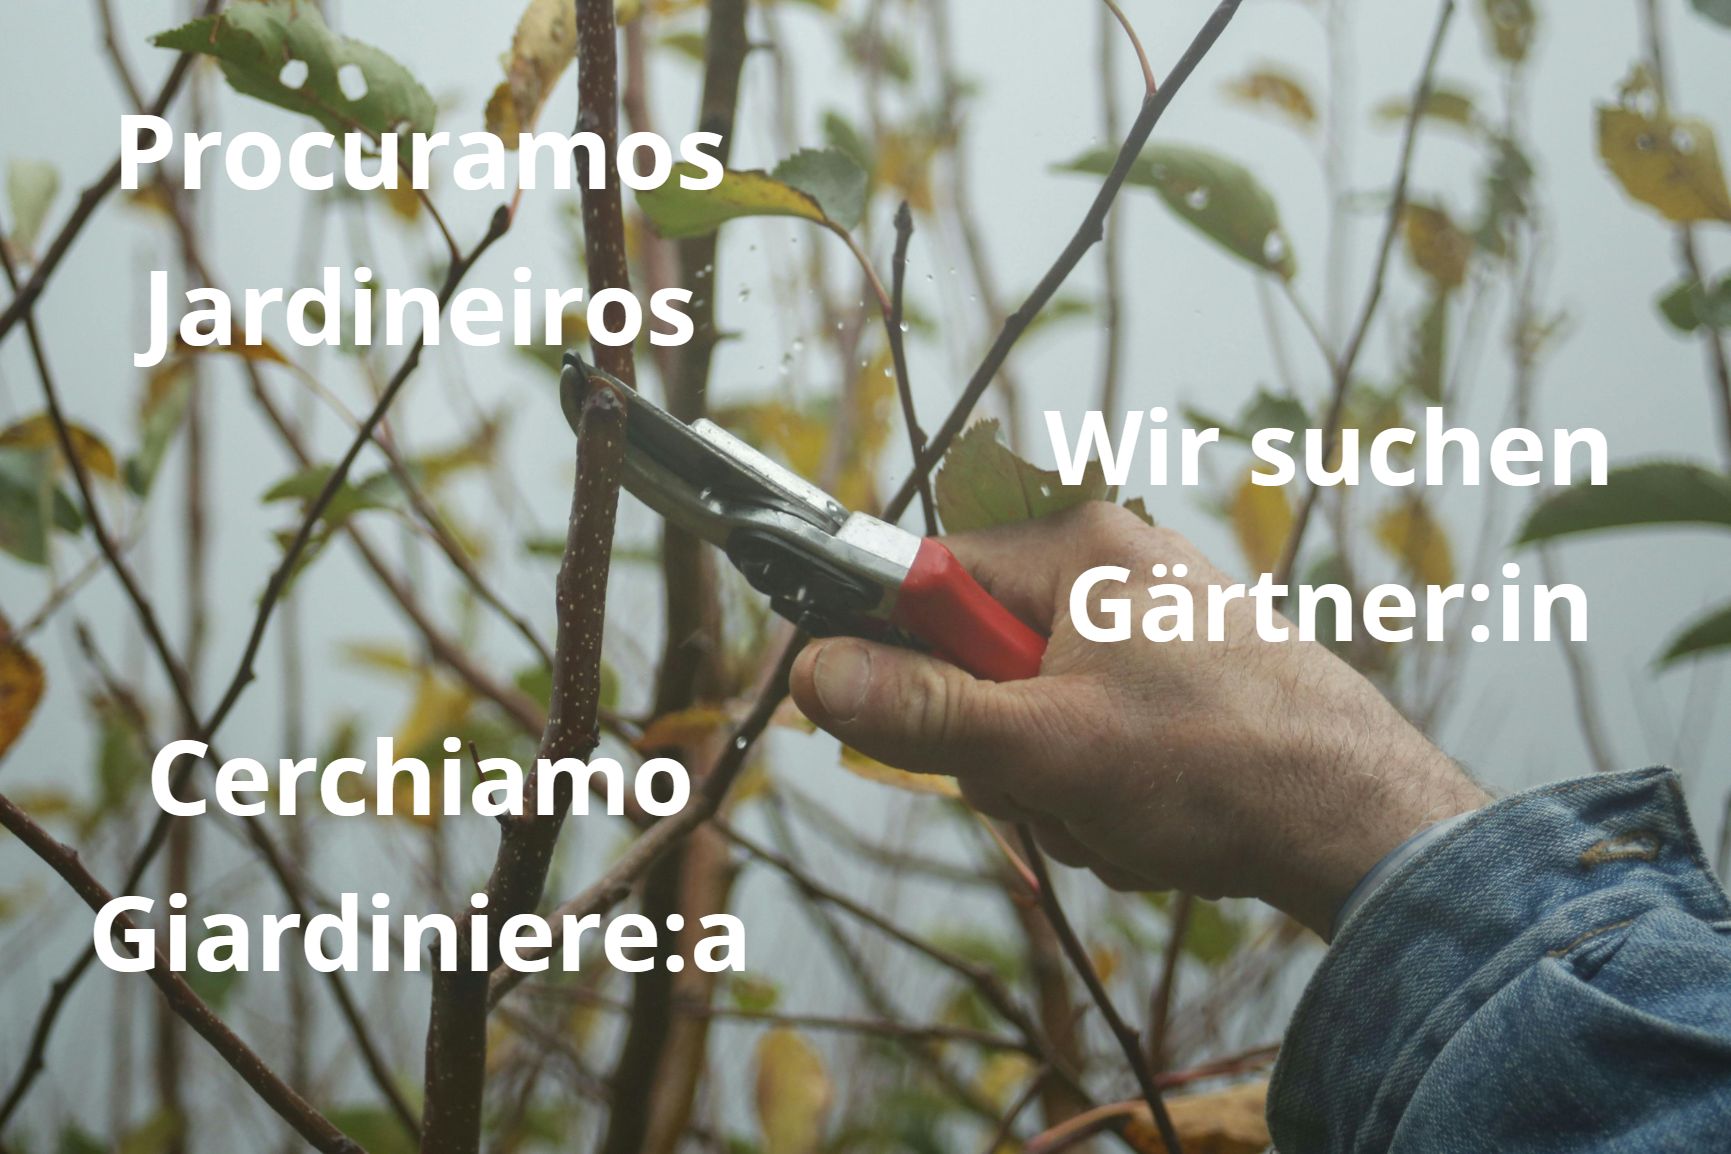 Wir suchen Gärtner:in, Cerchiamo Giardiniere, Procuramos Jardineiros EBA EFZ